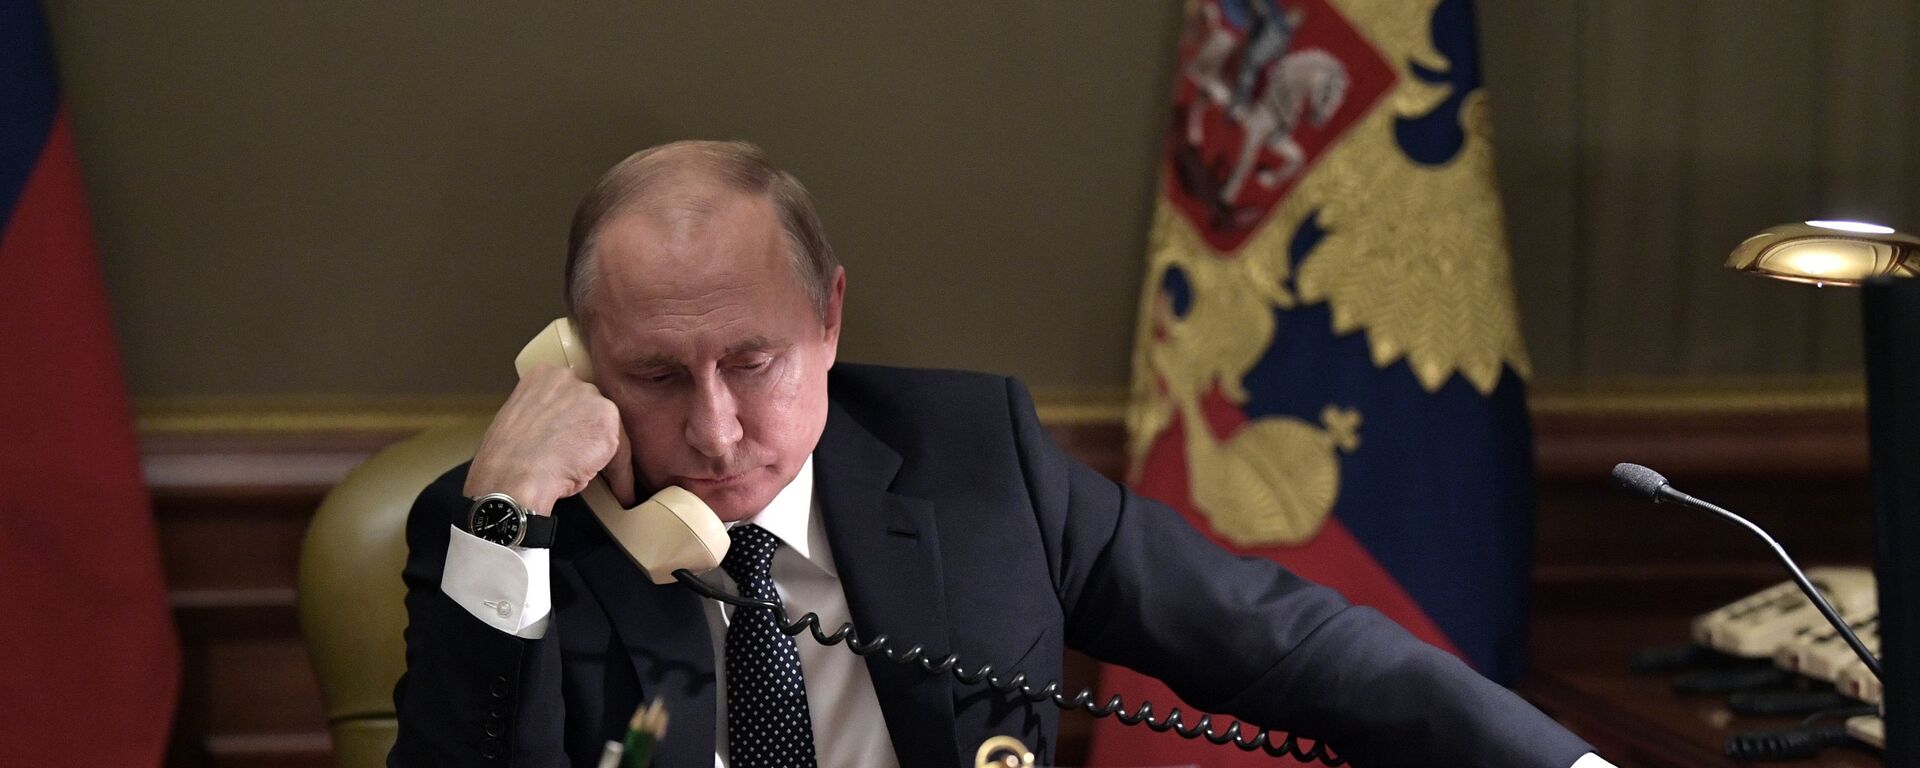 Rusijos prezidentas Vladimiras Putinas kalbasi telefonu - Sputnik Lietuva, 1920, 28.02.2022